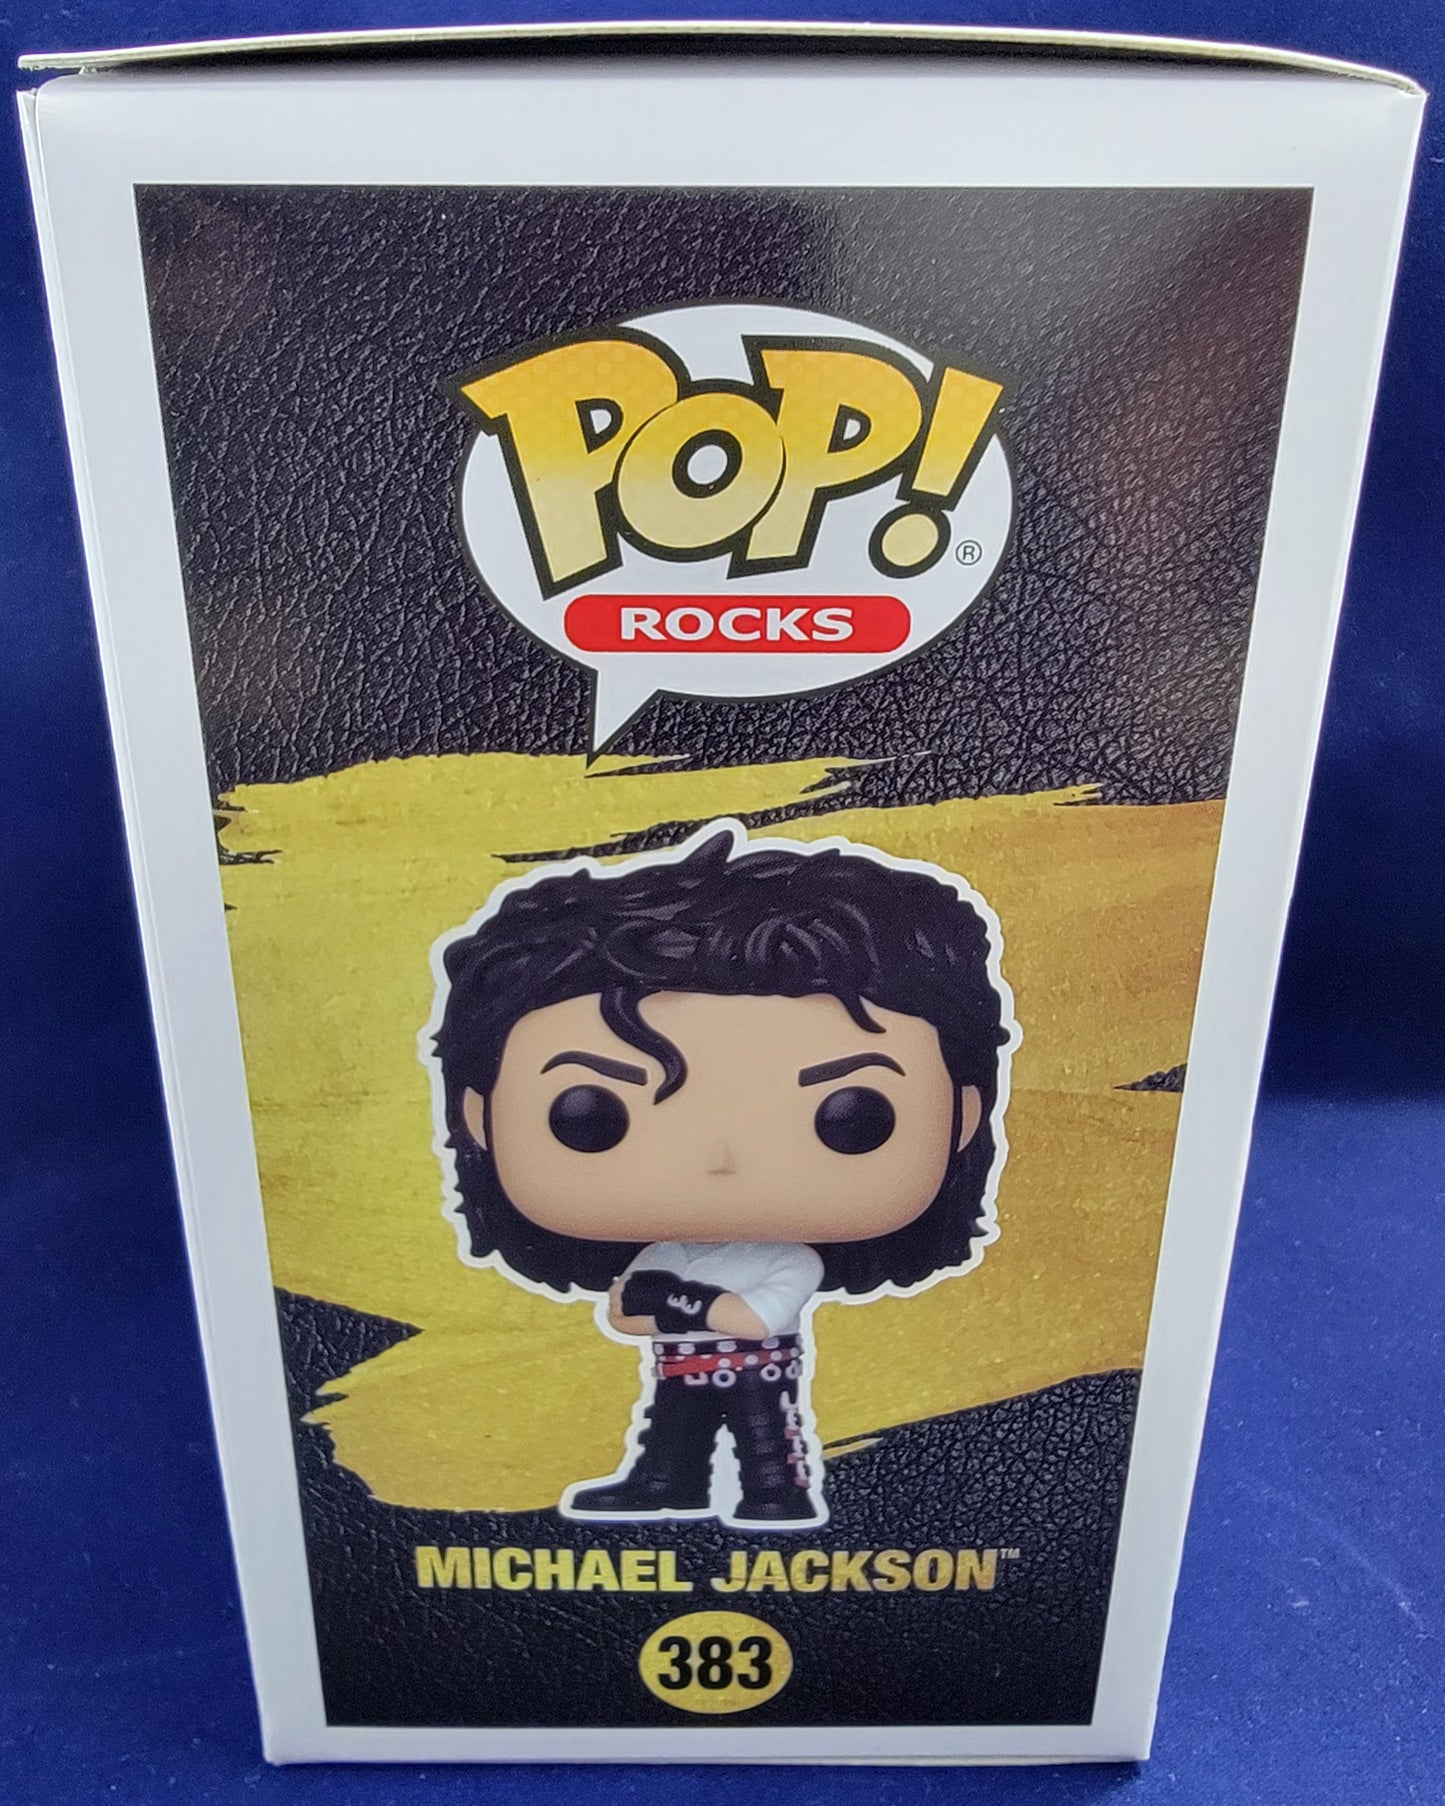 Michael jackson funko # 383 (nib)
With pop protector